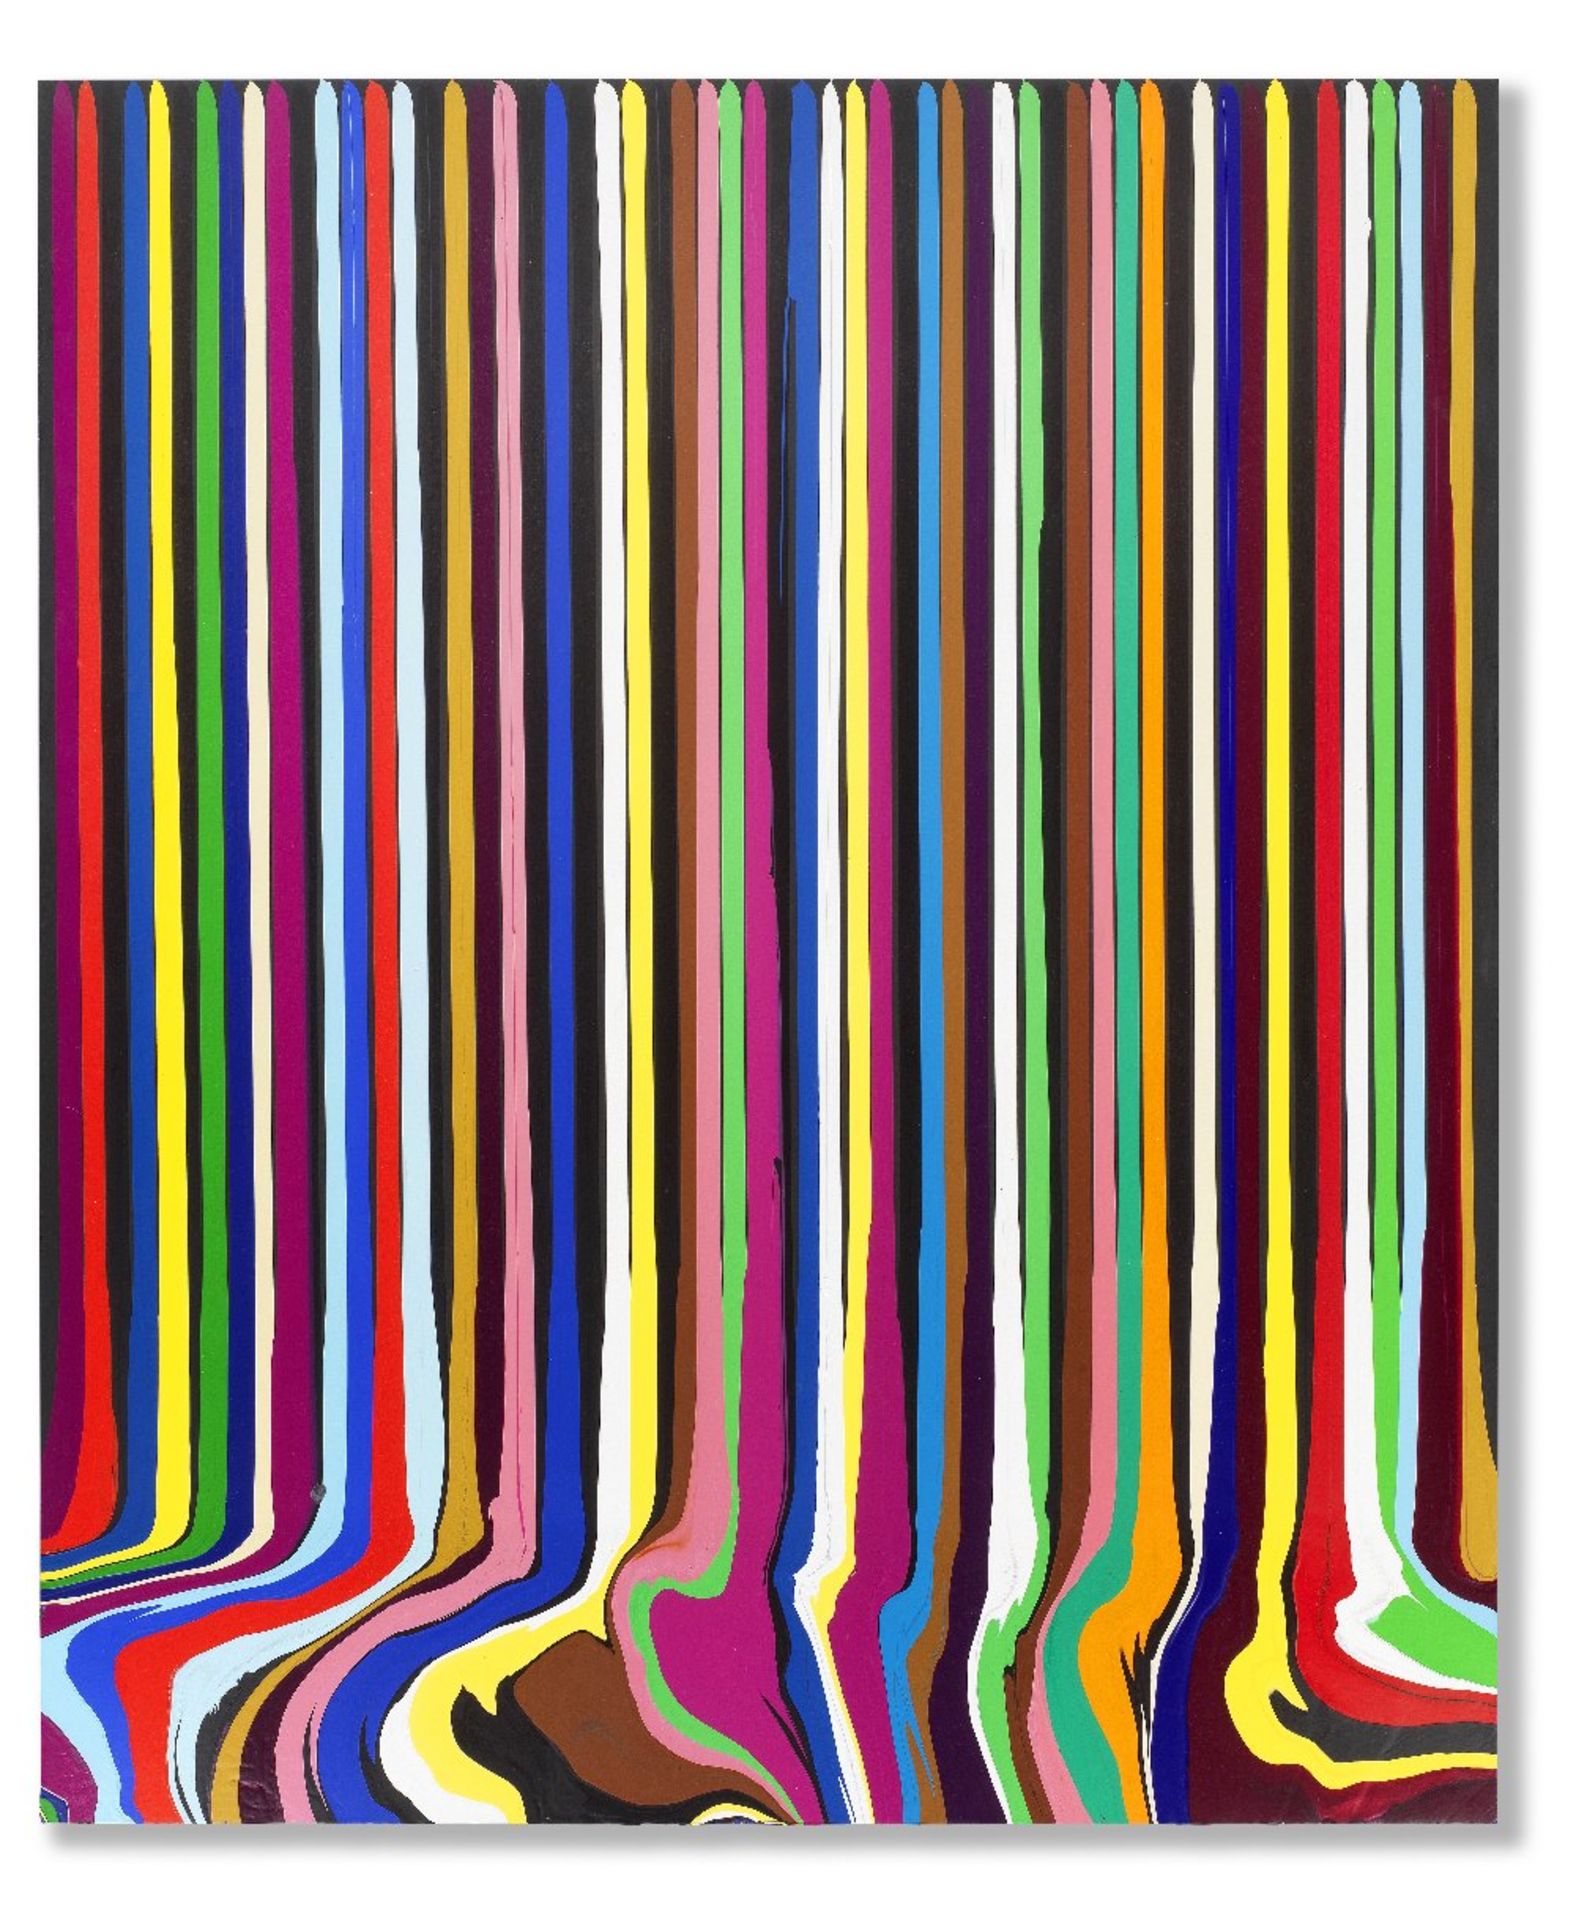 Ian Davenport (British, born 1966) Puddle Painting: Jazz 147 x 123.3 cm. (57 7/8 x 48 1/2 in.) (...